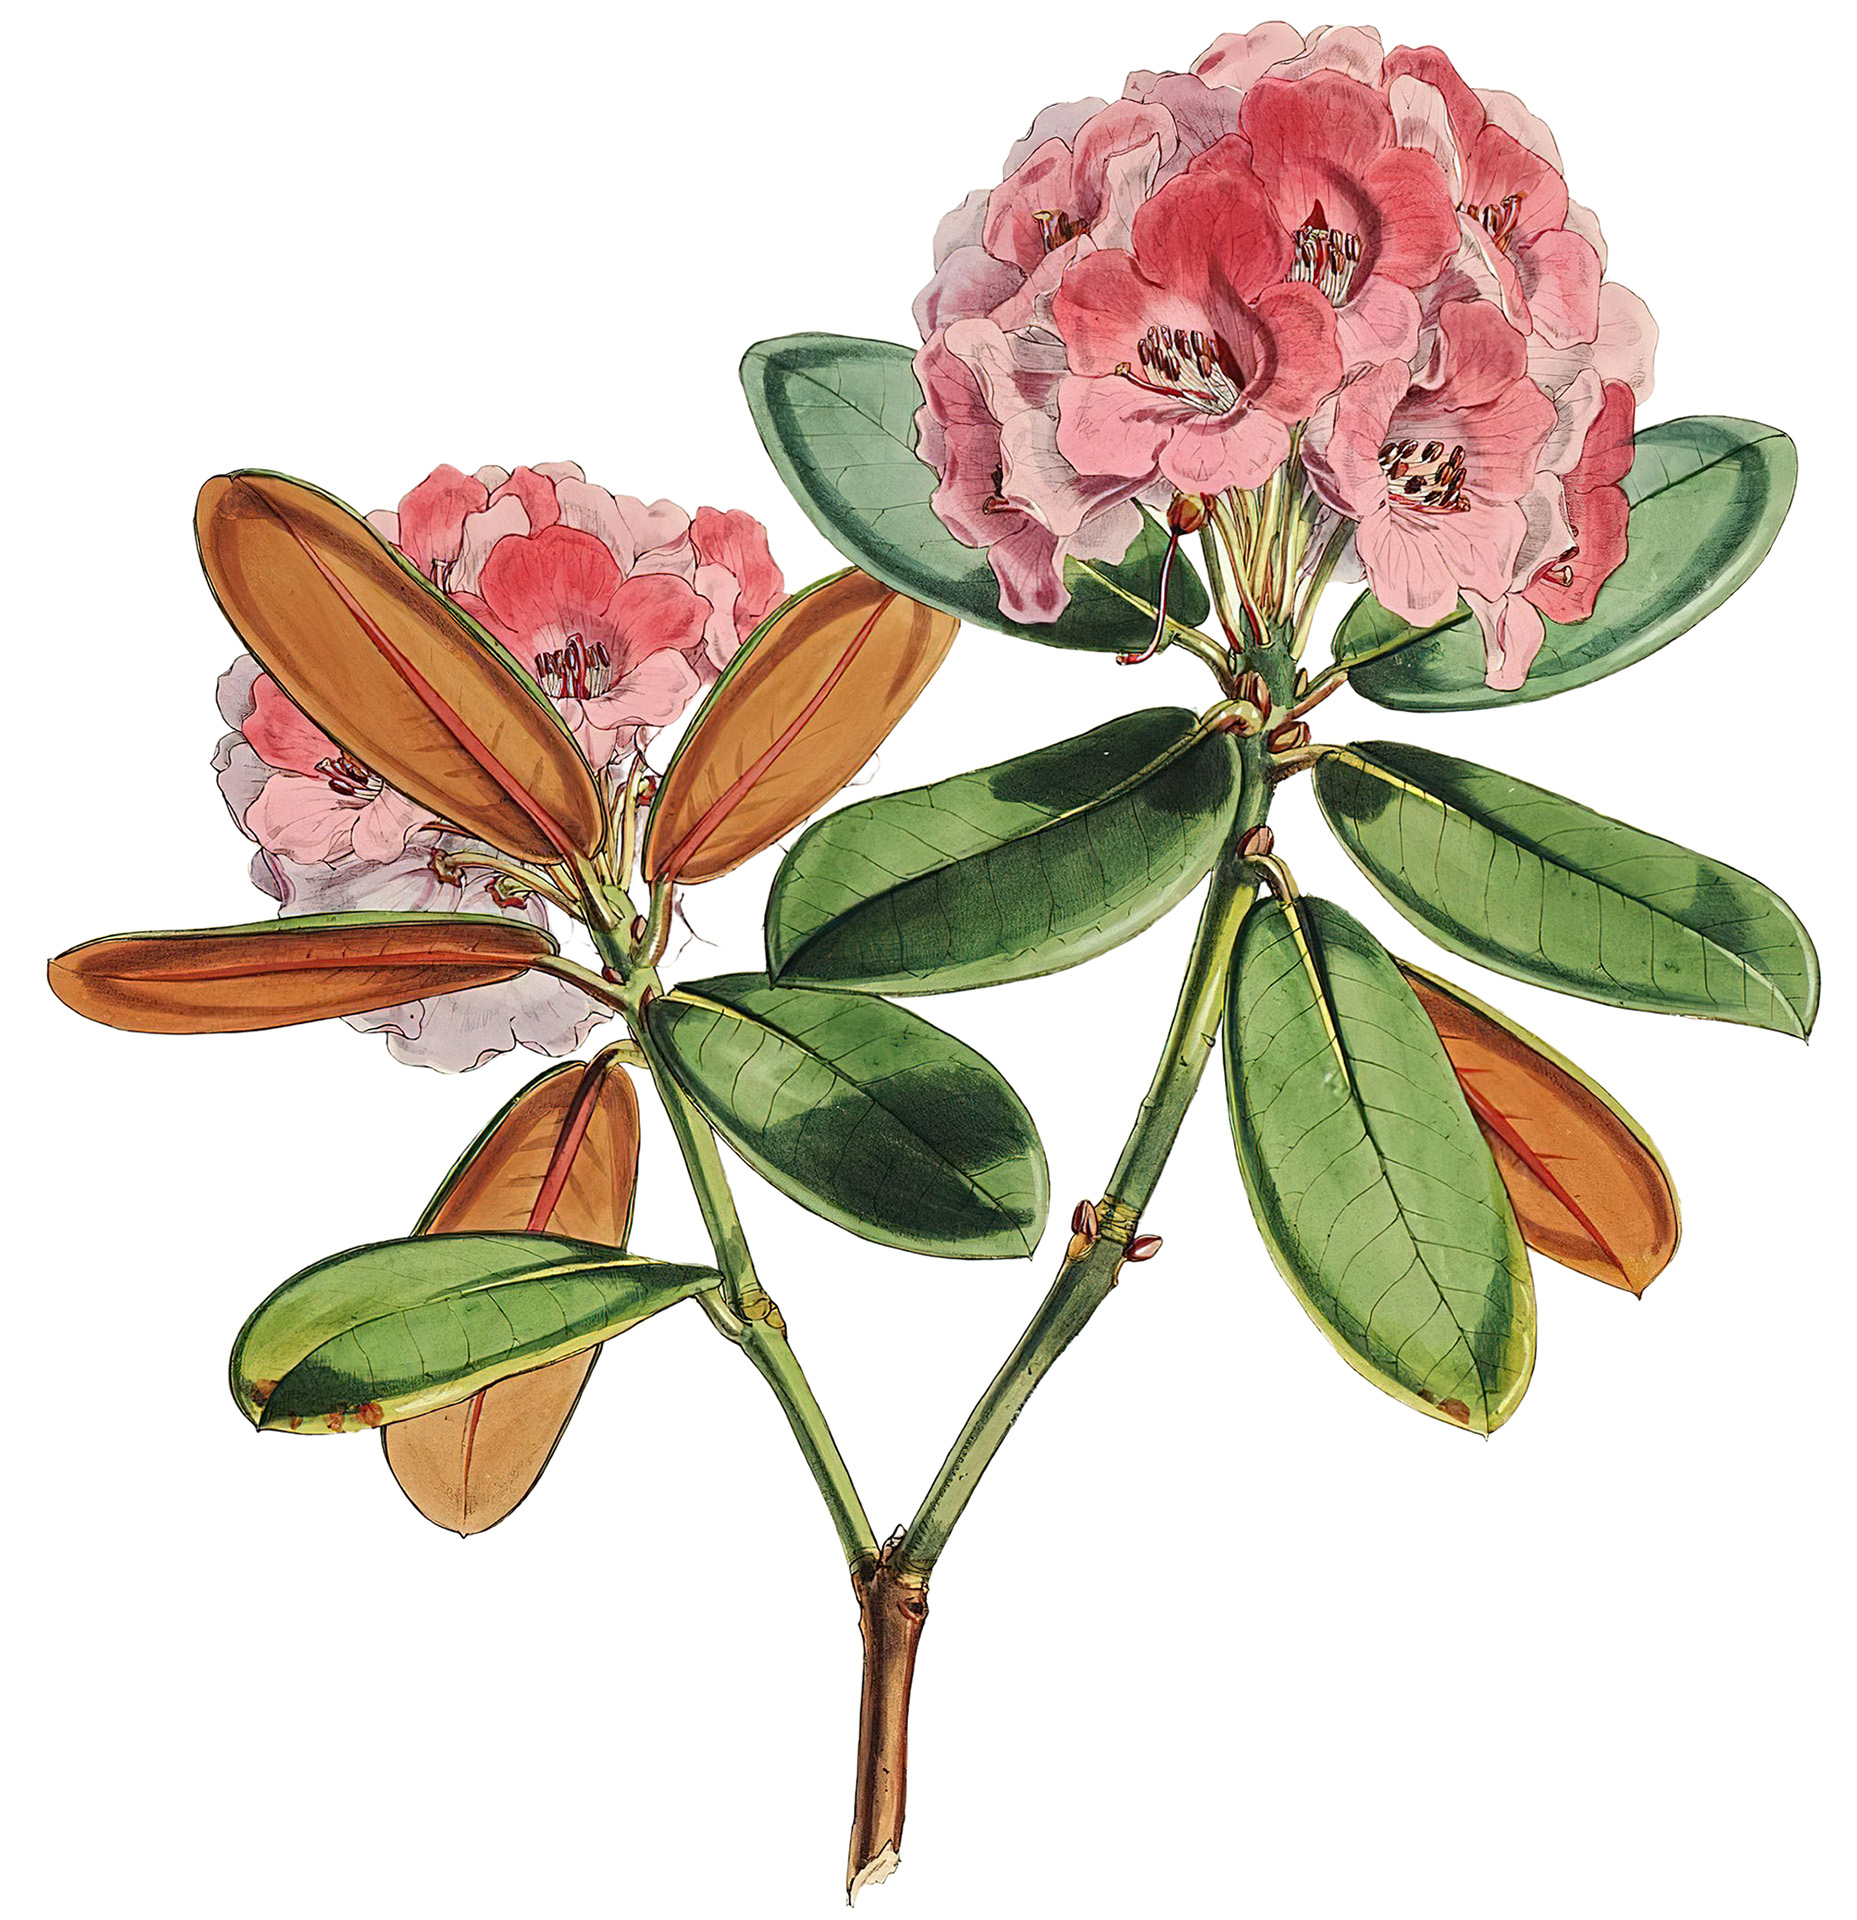 Rhododendron Illustration